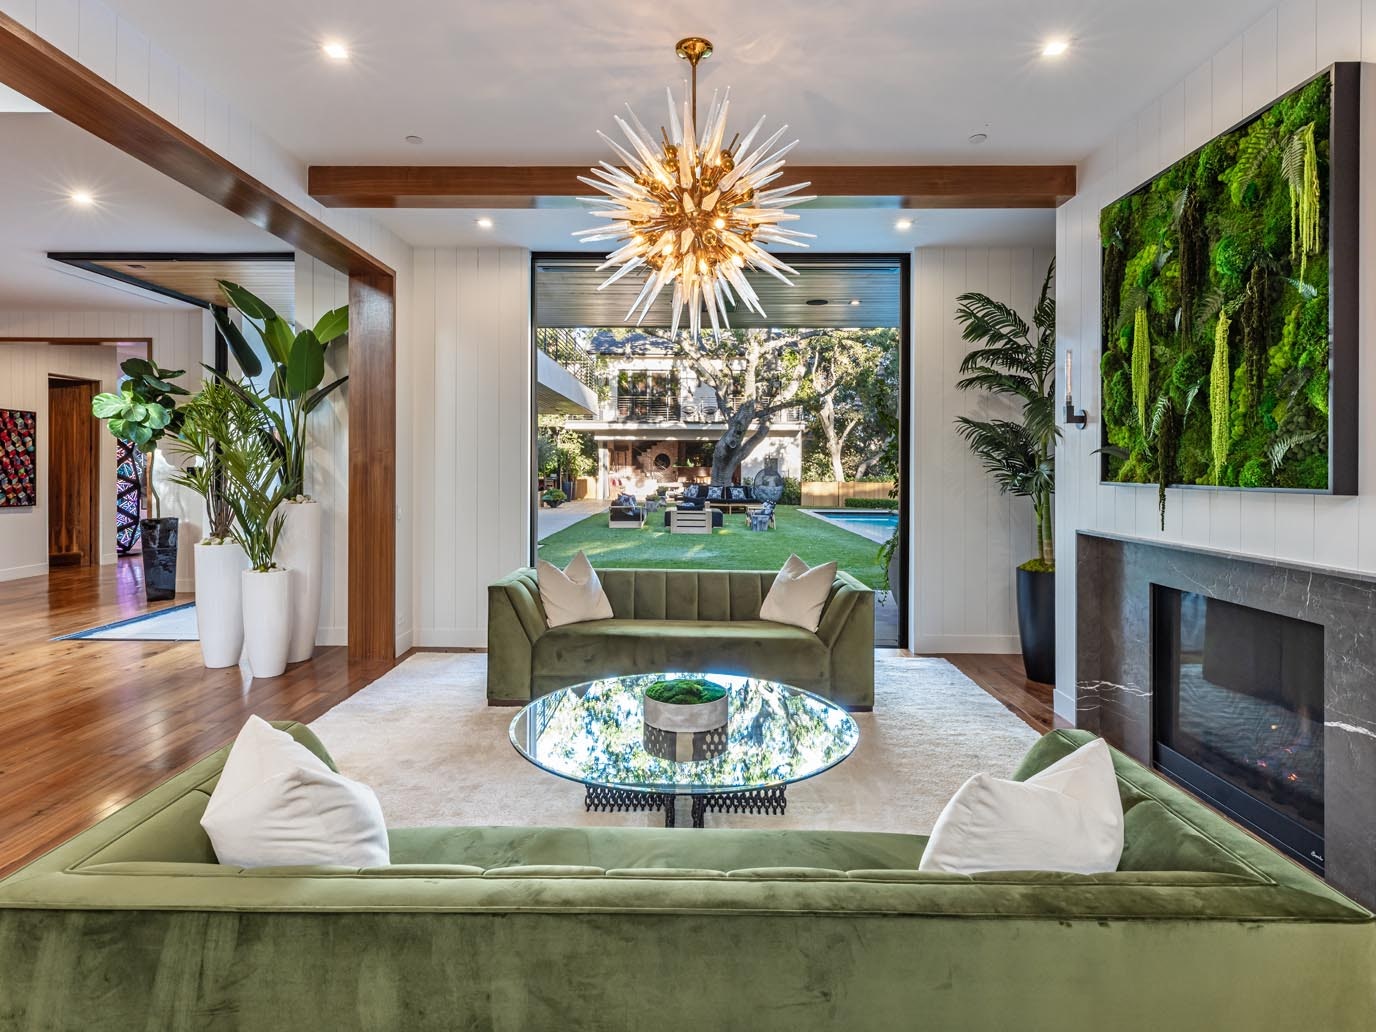 Zedd Lists $19 Million Modern Encino Mansion He Bought From Joe Jonas and Sophie Turner